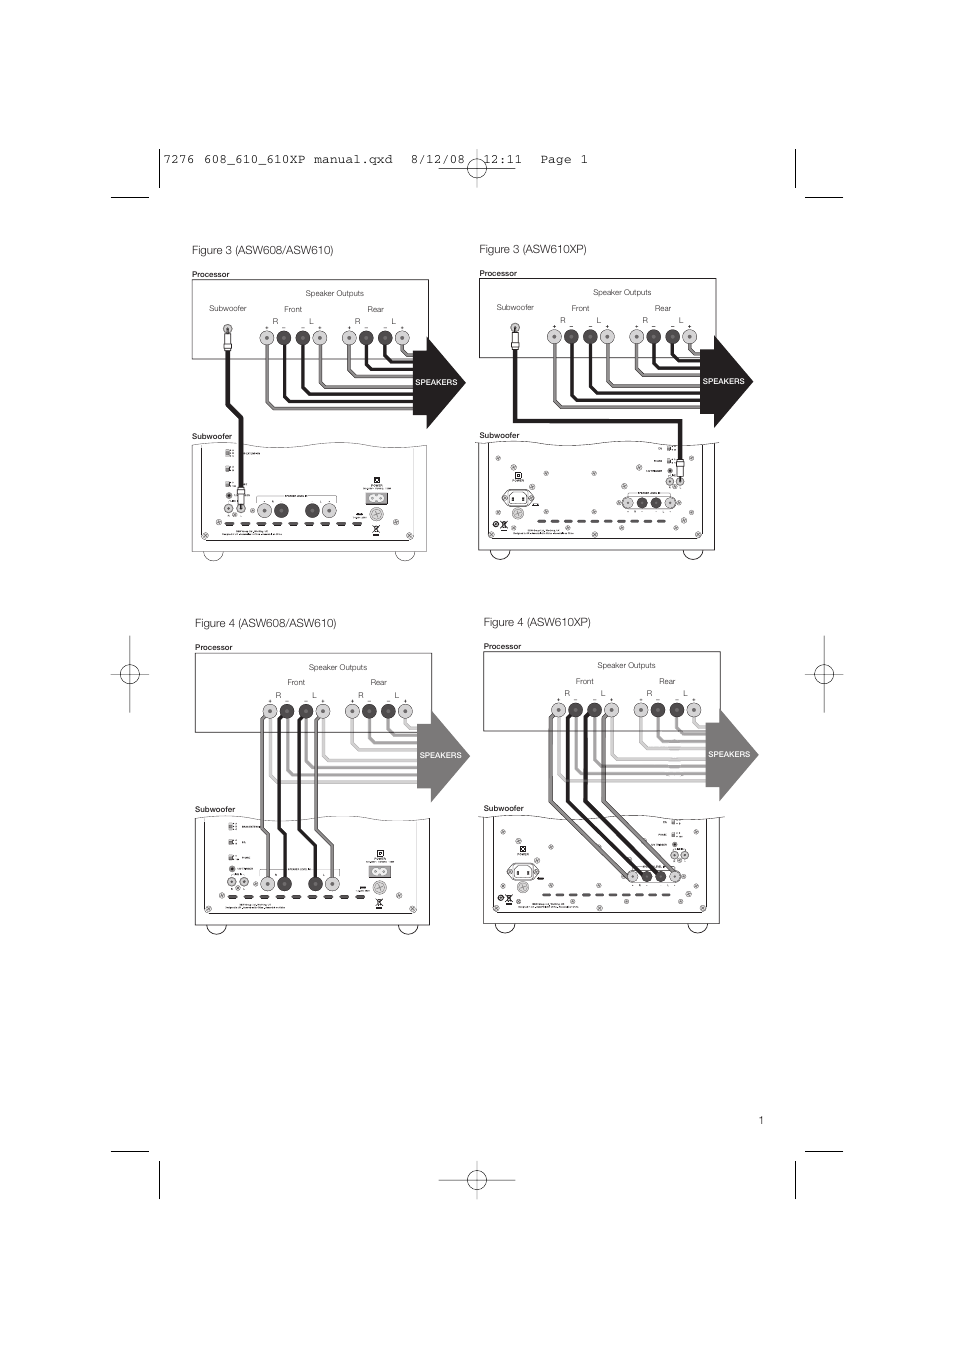 Figure 3 (asw610xp), Figure 4 (asw610xp) | Bowers & Wilkins ASW610 User  Manual | Page 4 / 104